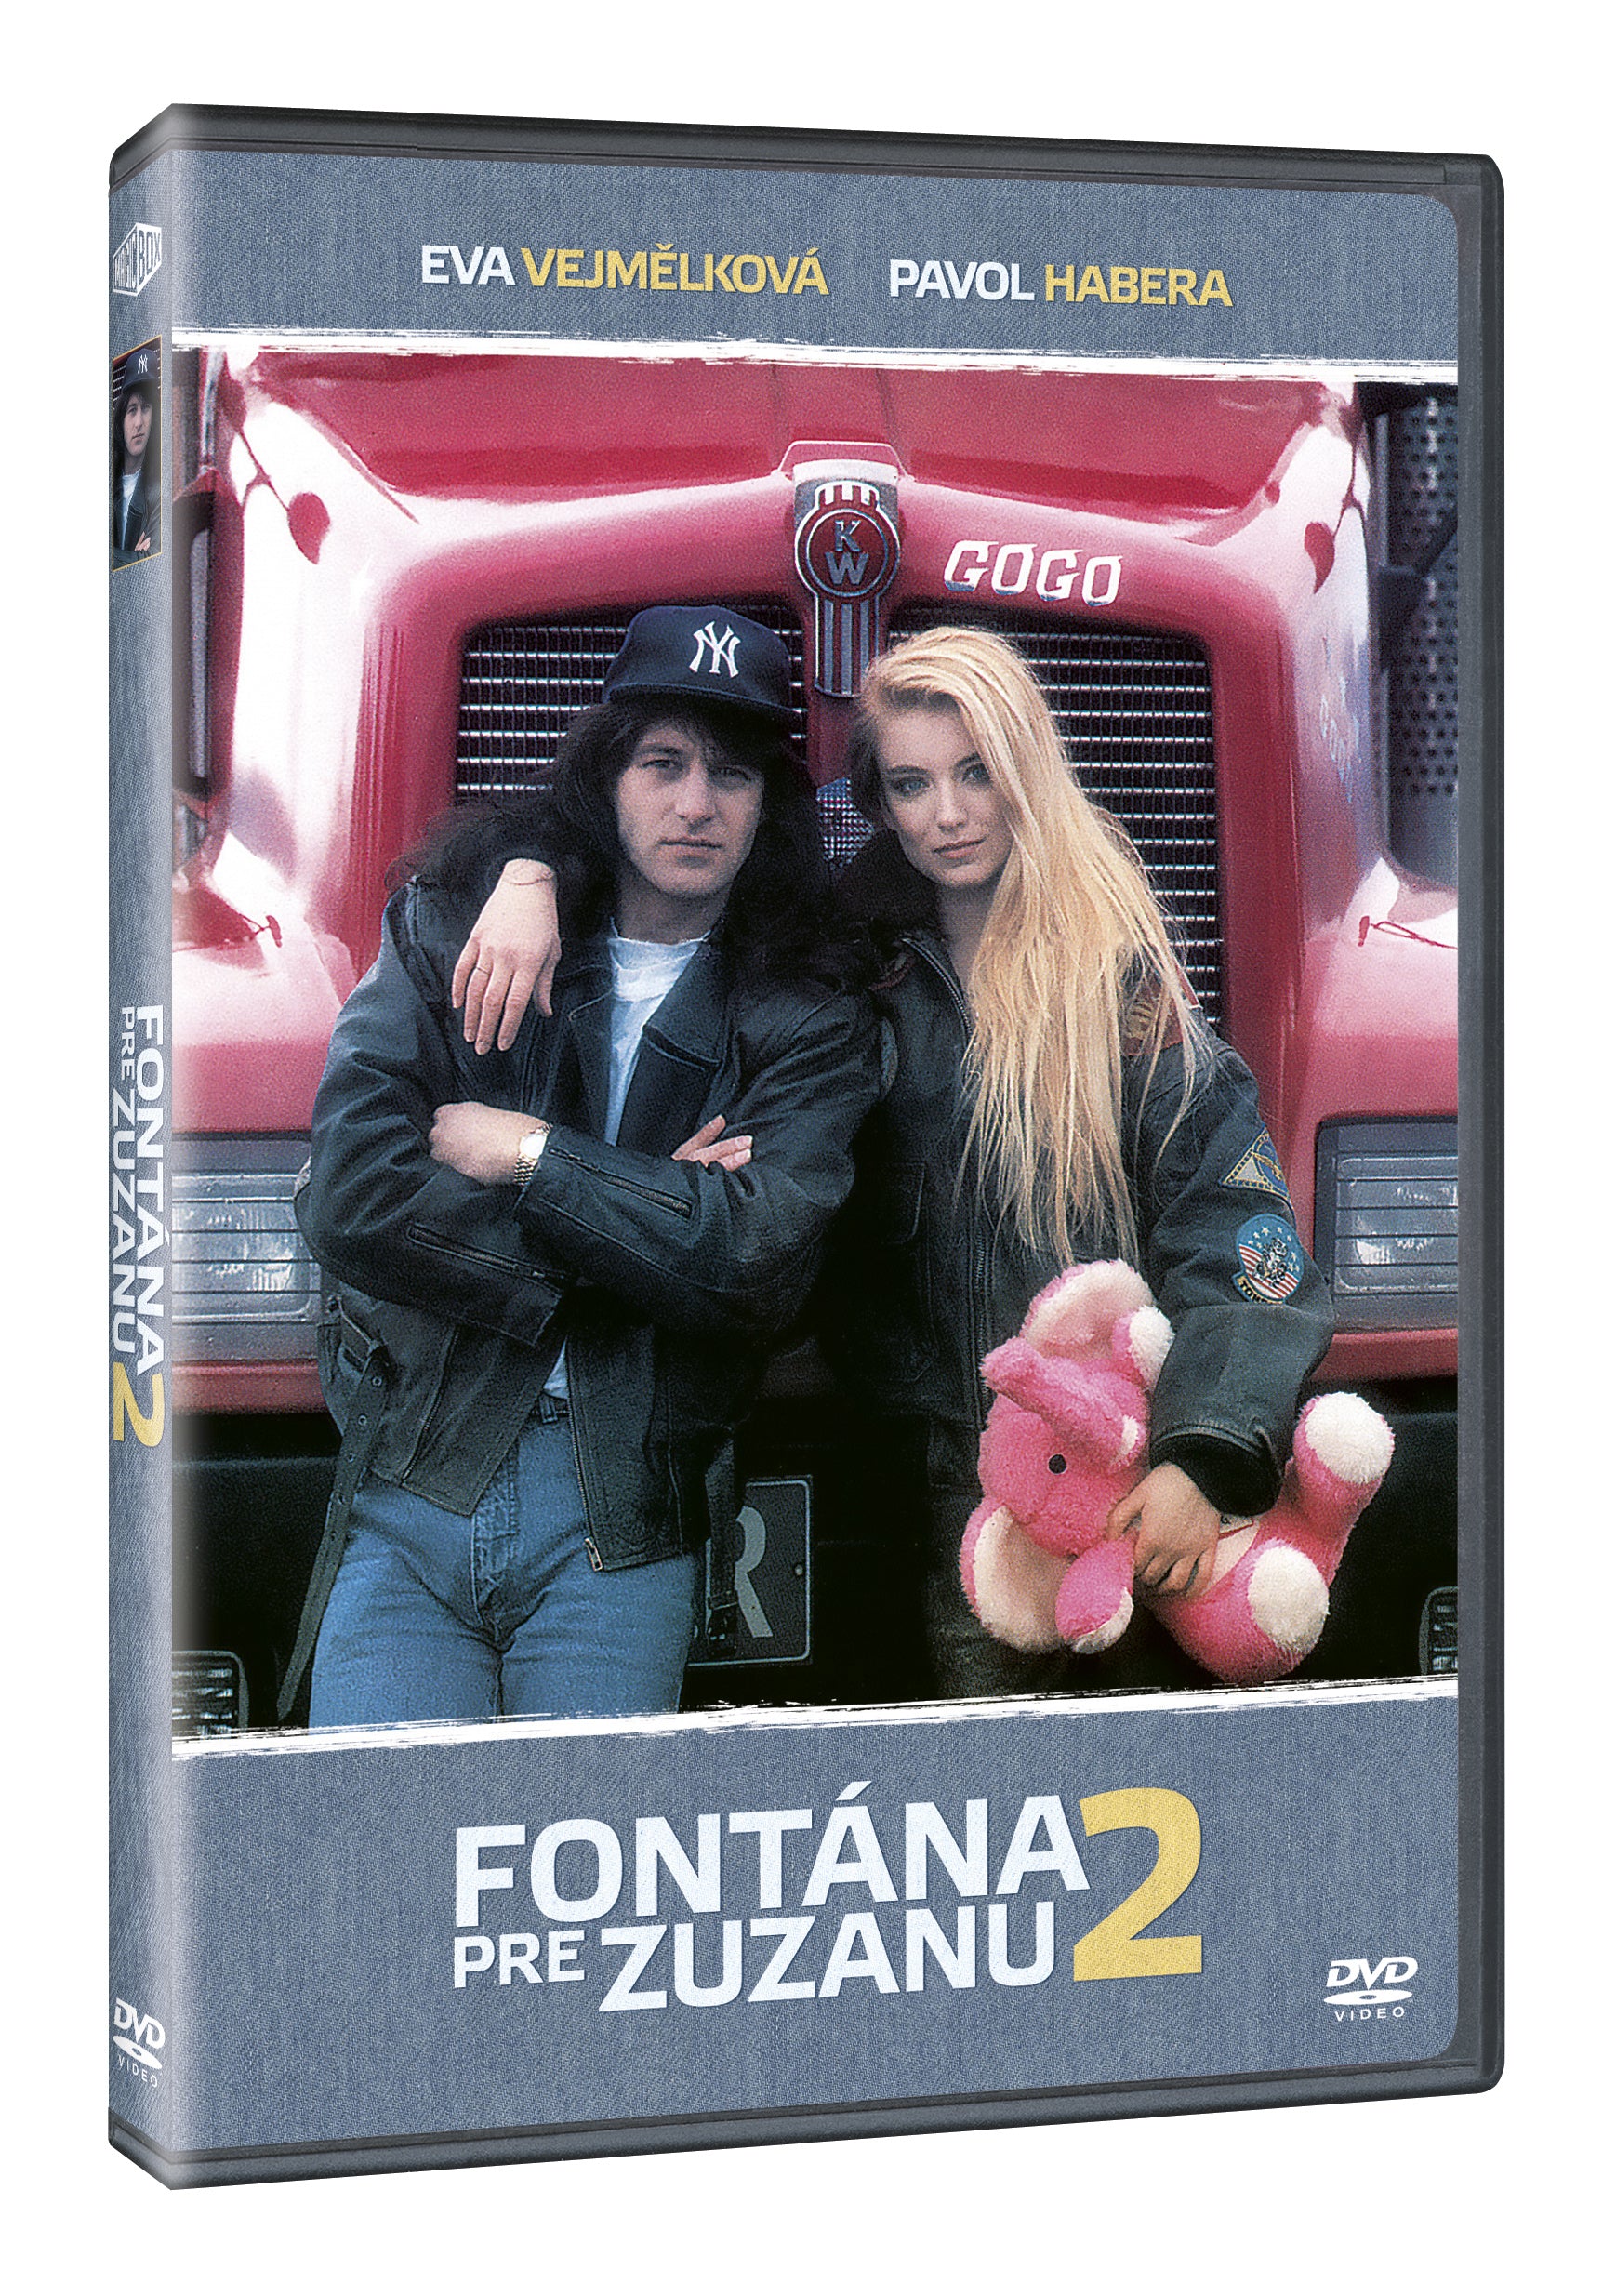 Fontana pre Zuzanu 2. DVD / Fontana pre Zuzanu 2